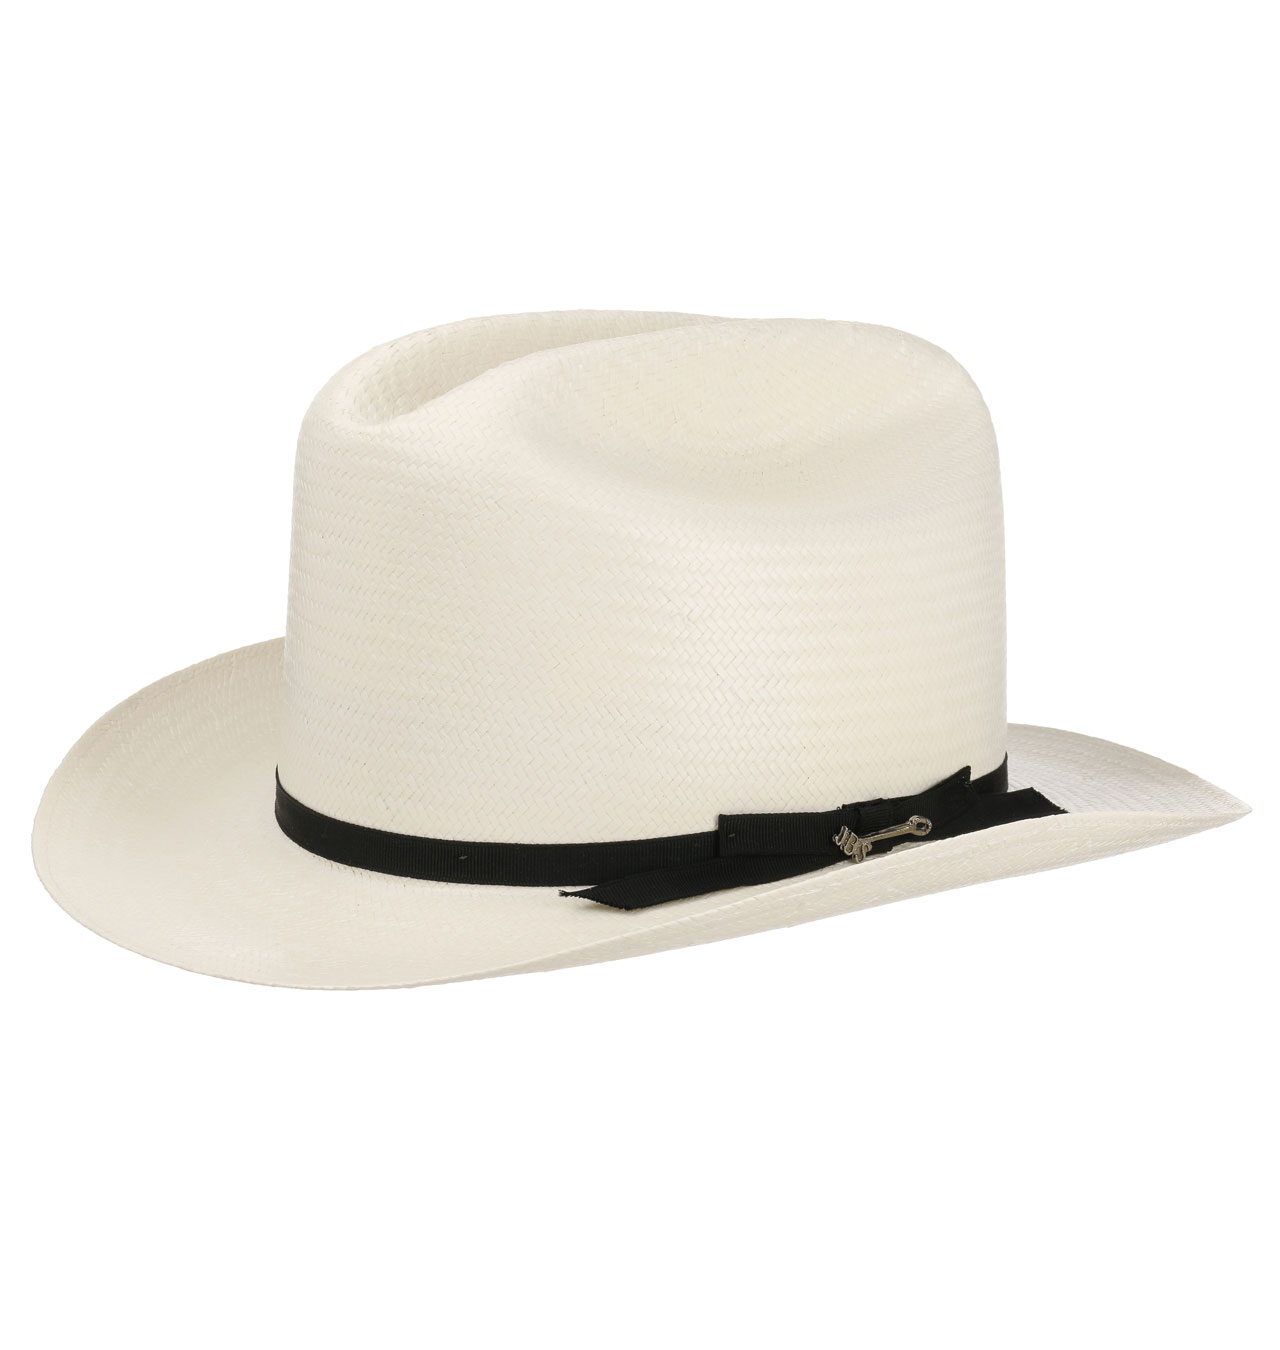 Stetson - Open Road (6X) Straw Hat